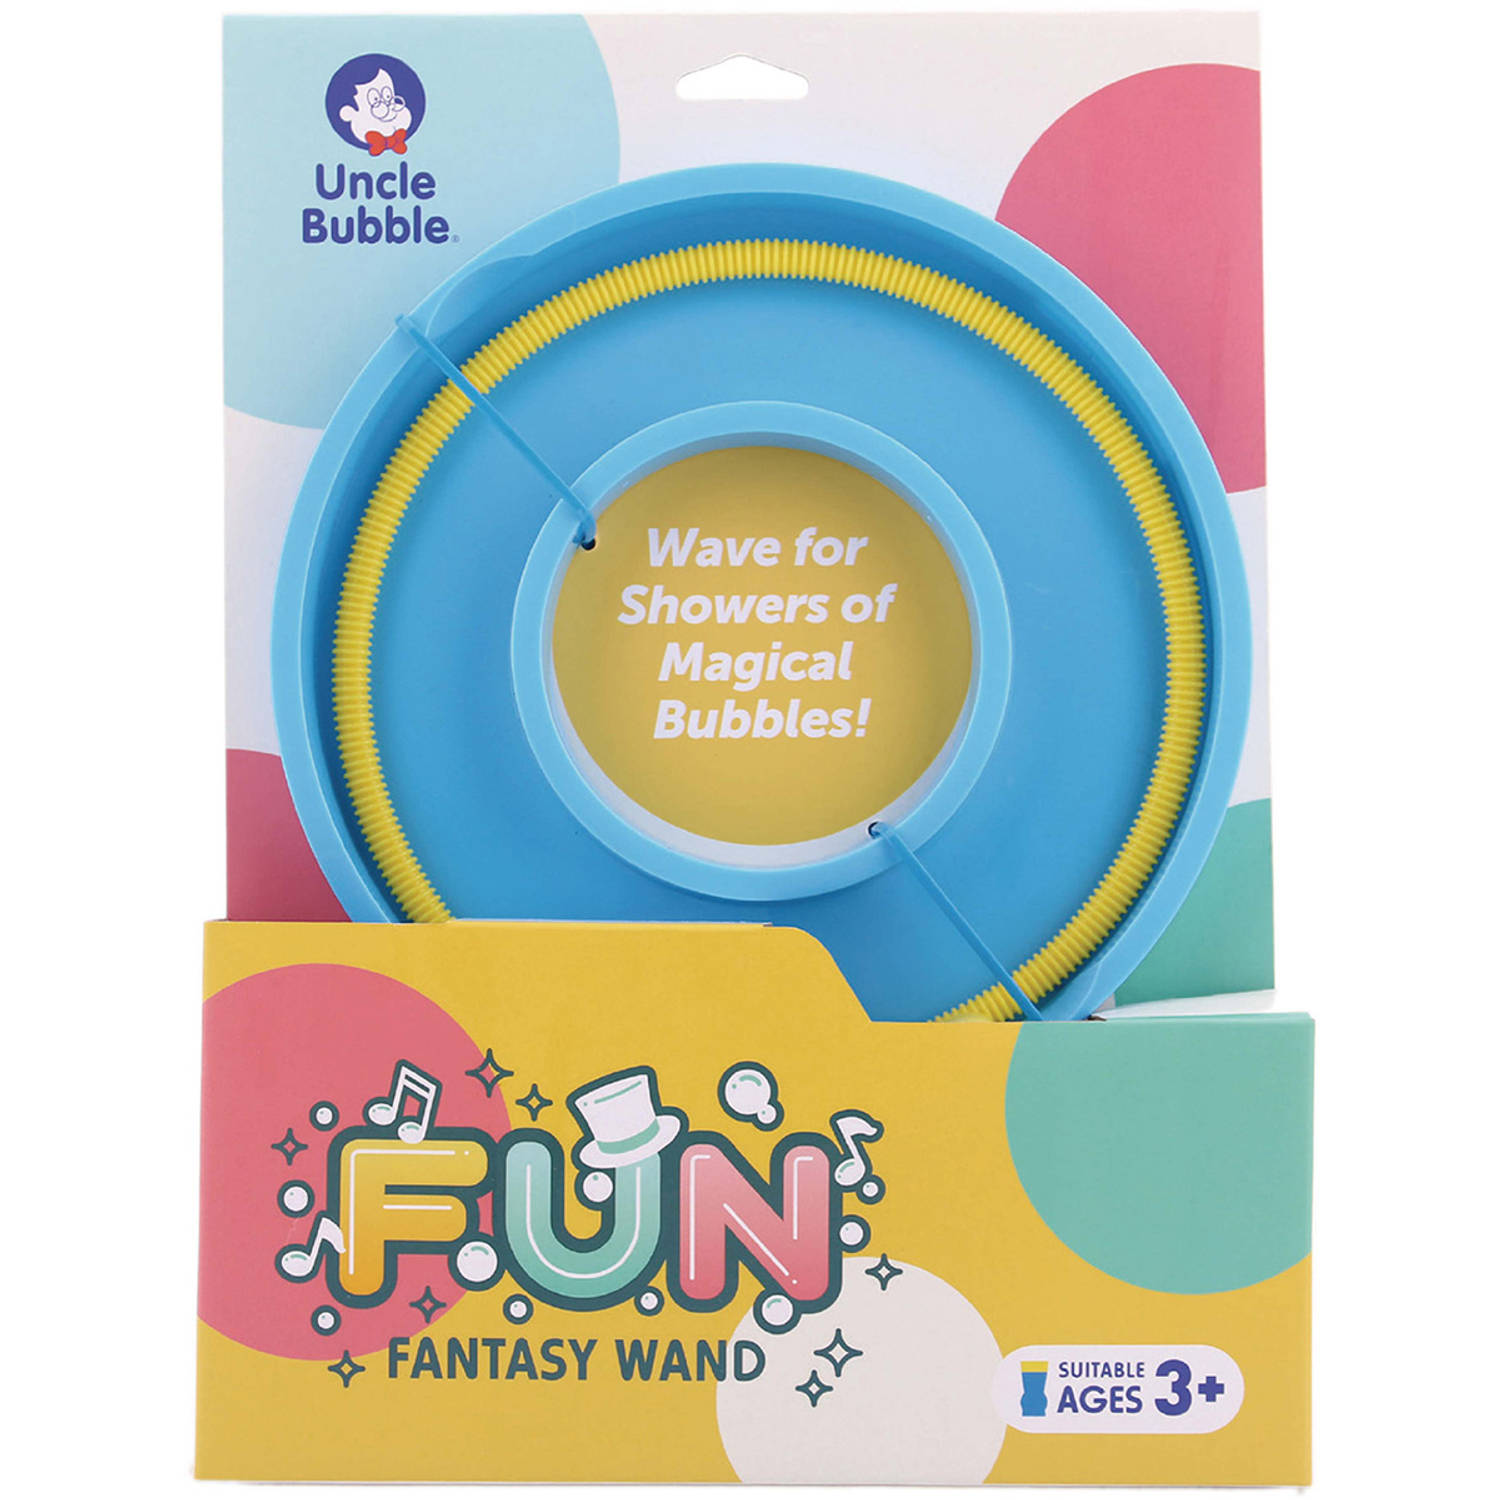 Uncle Bubble Fun Big Bubble Wand